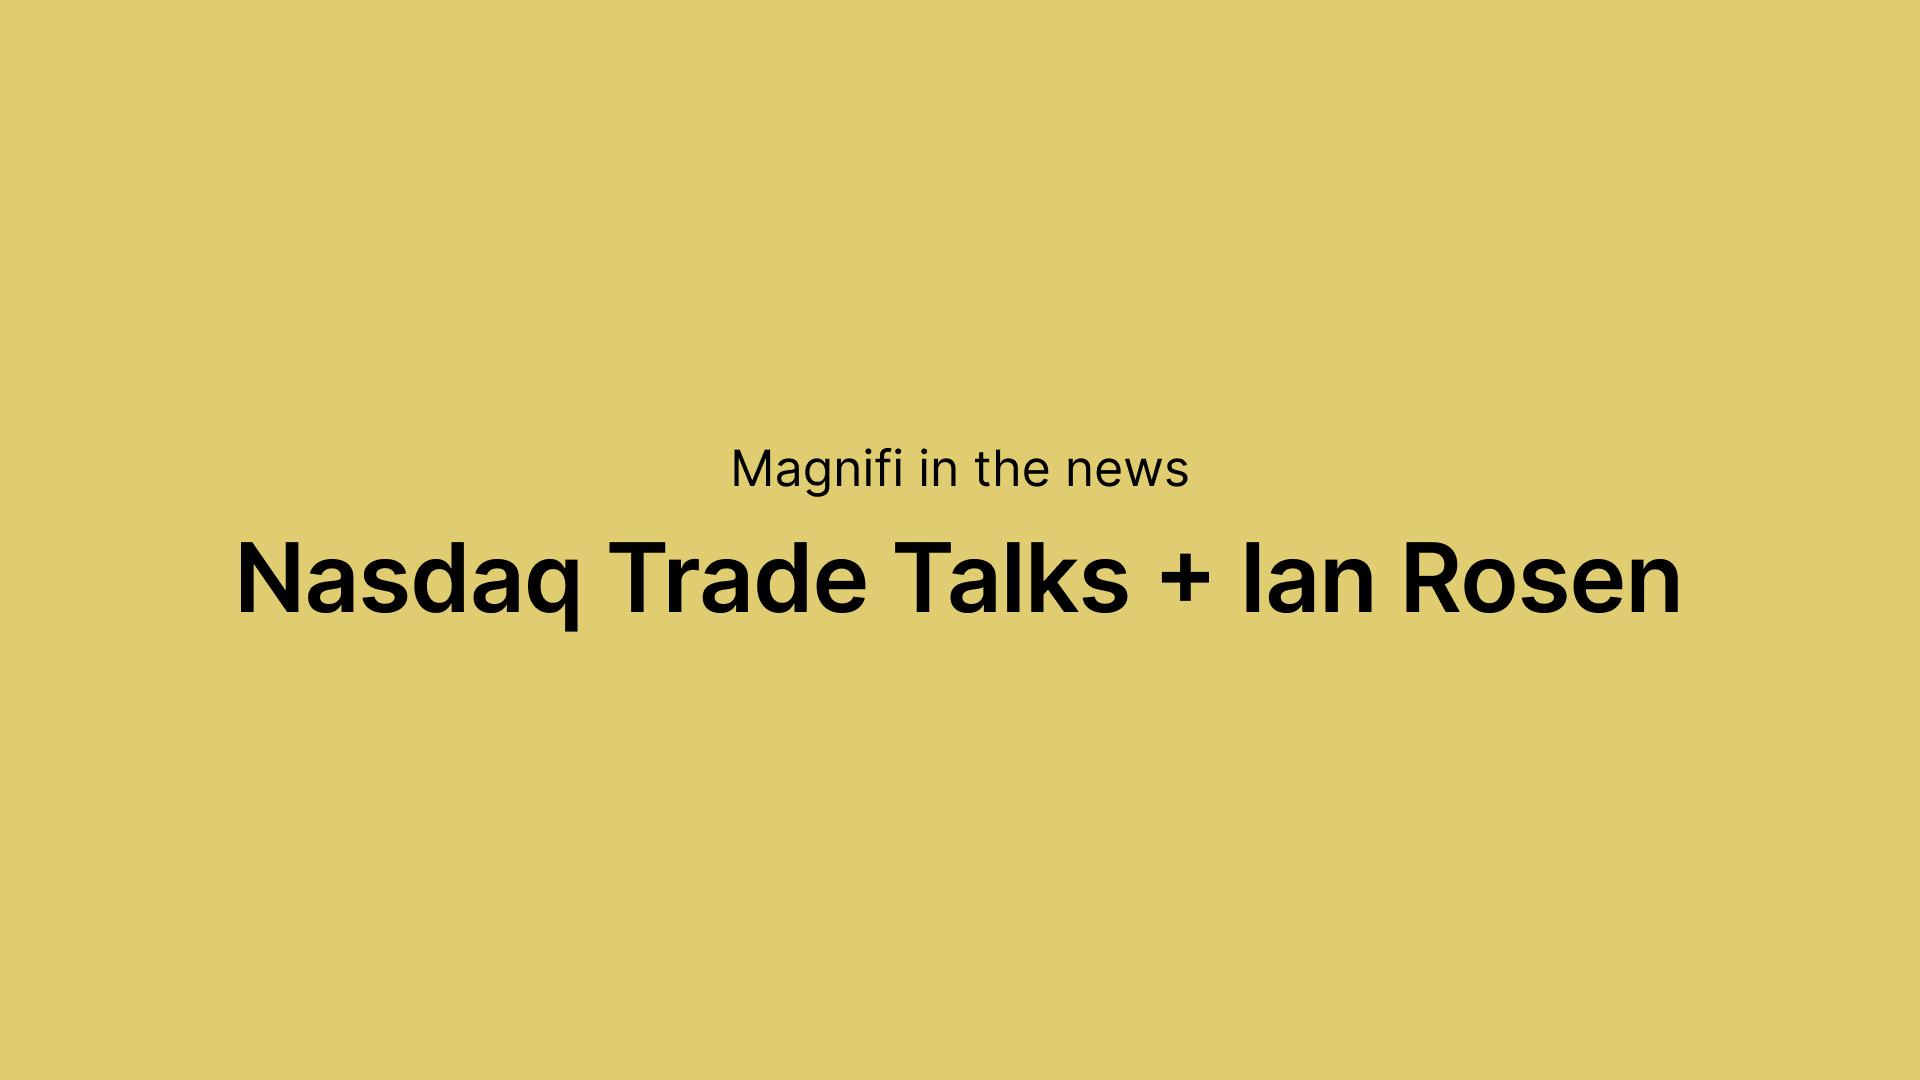 Magnifi in the news:
Nasdaq Trade Talks + Ian Rosen